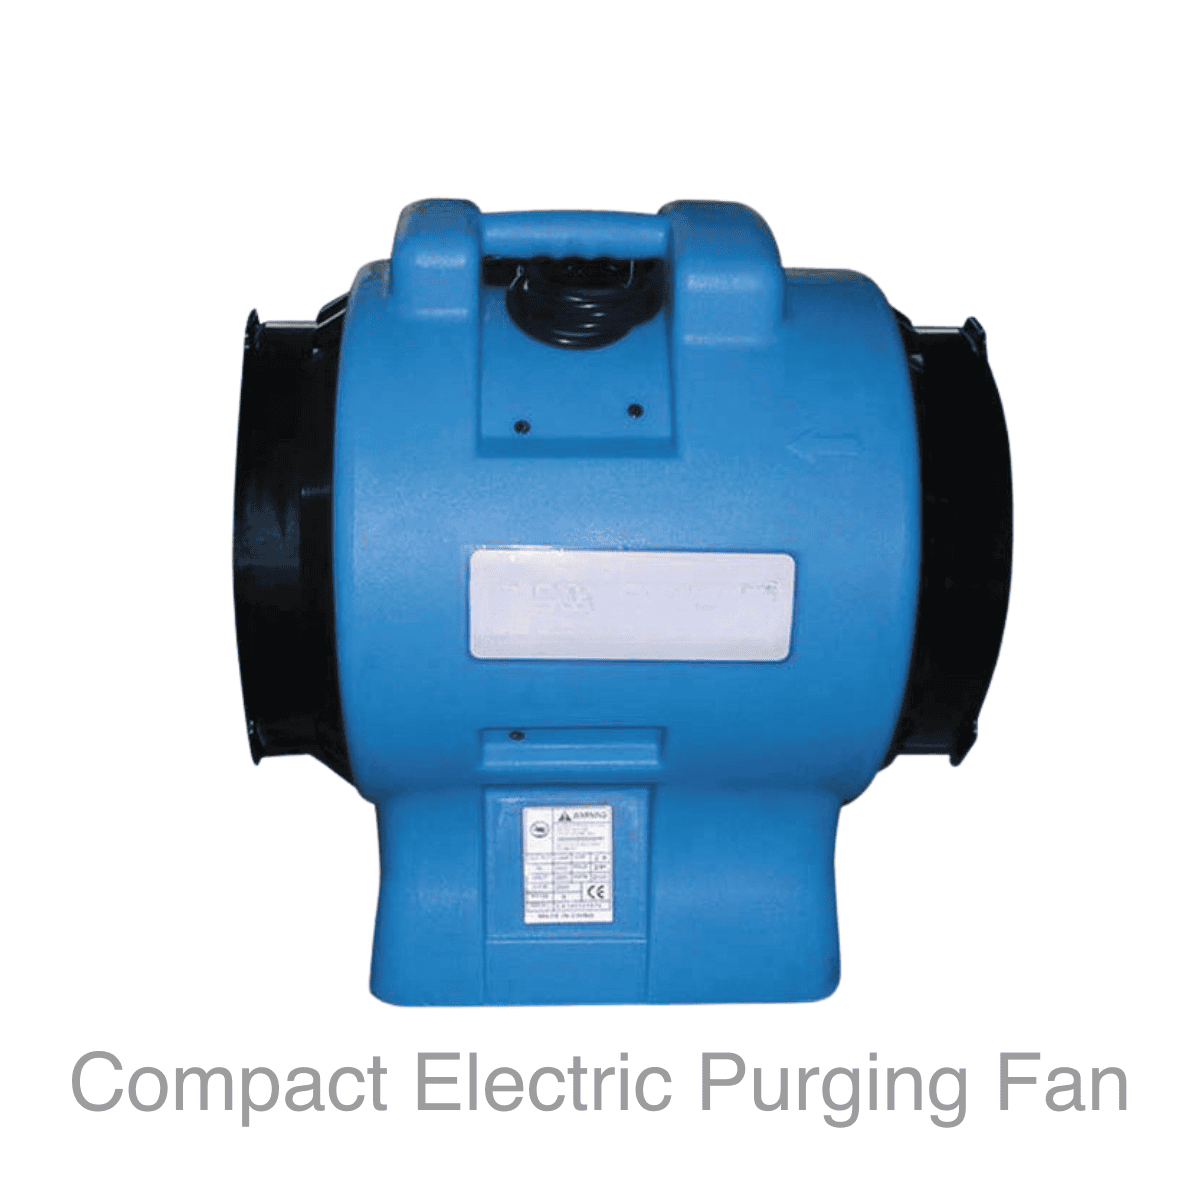 Compact Electric Purging Fan – 1